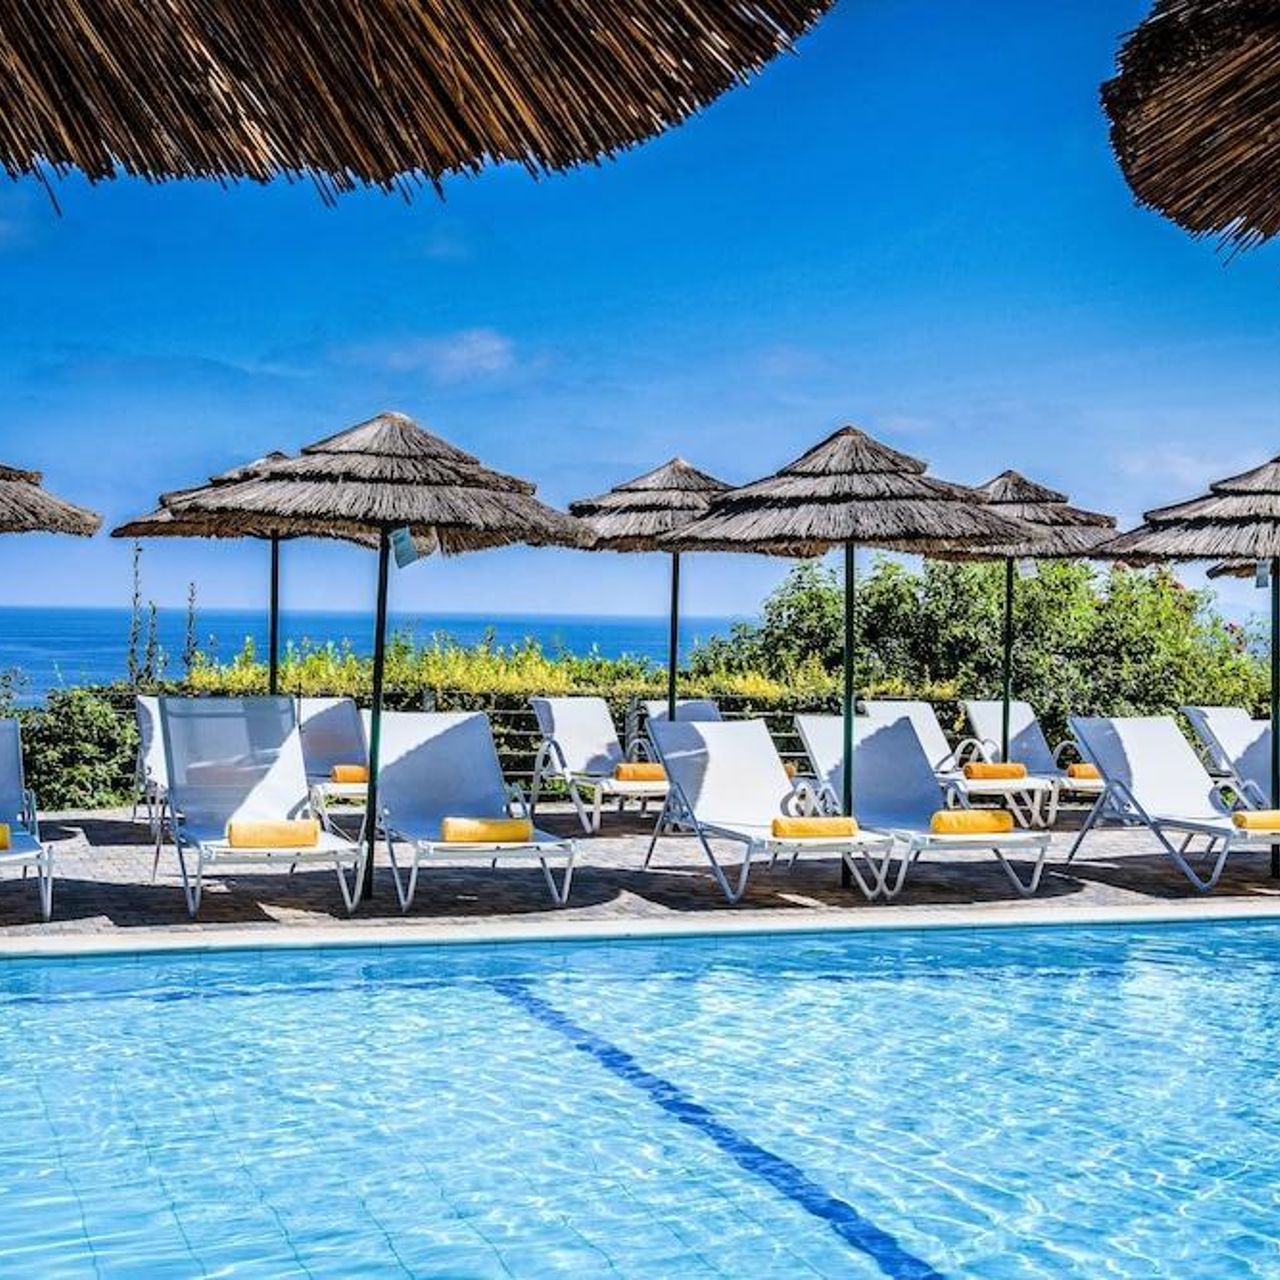 Blue Bay Resort Hotel - Crete - Great prices at HOTEL INFO